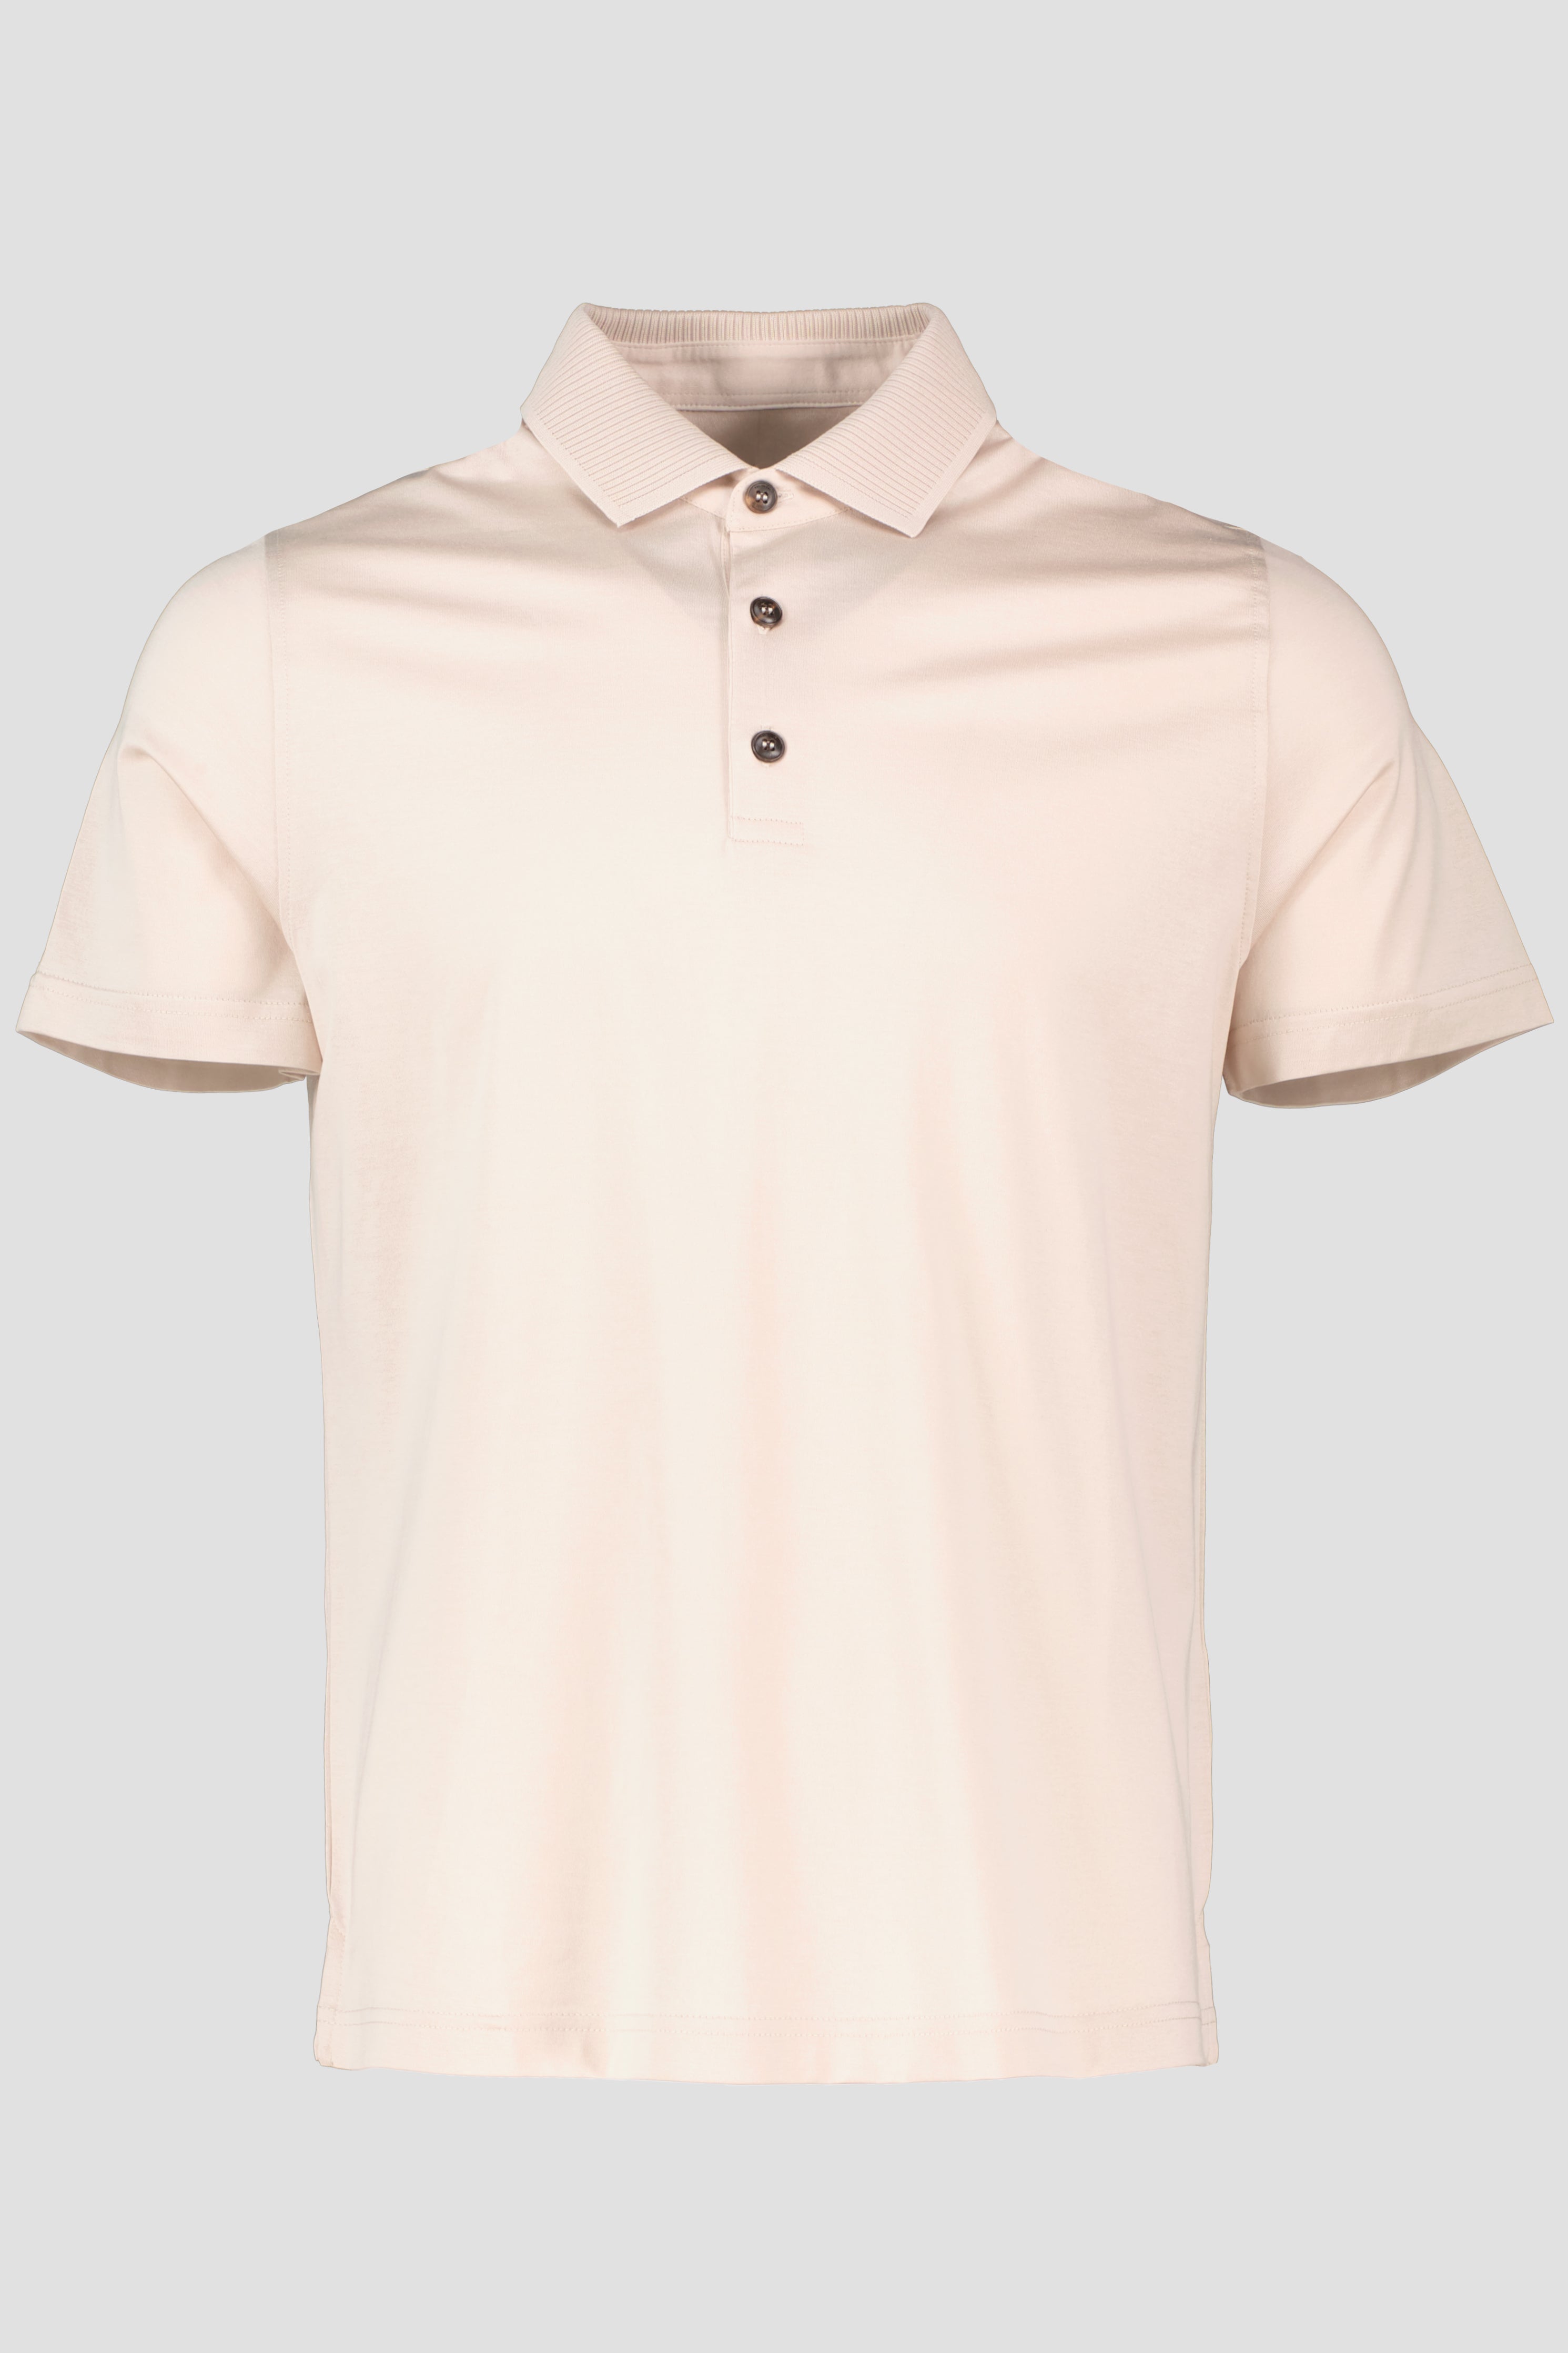 Men's Pal Zileri Mercerised Beige Polo Shirt